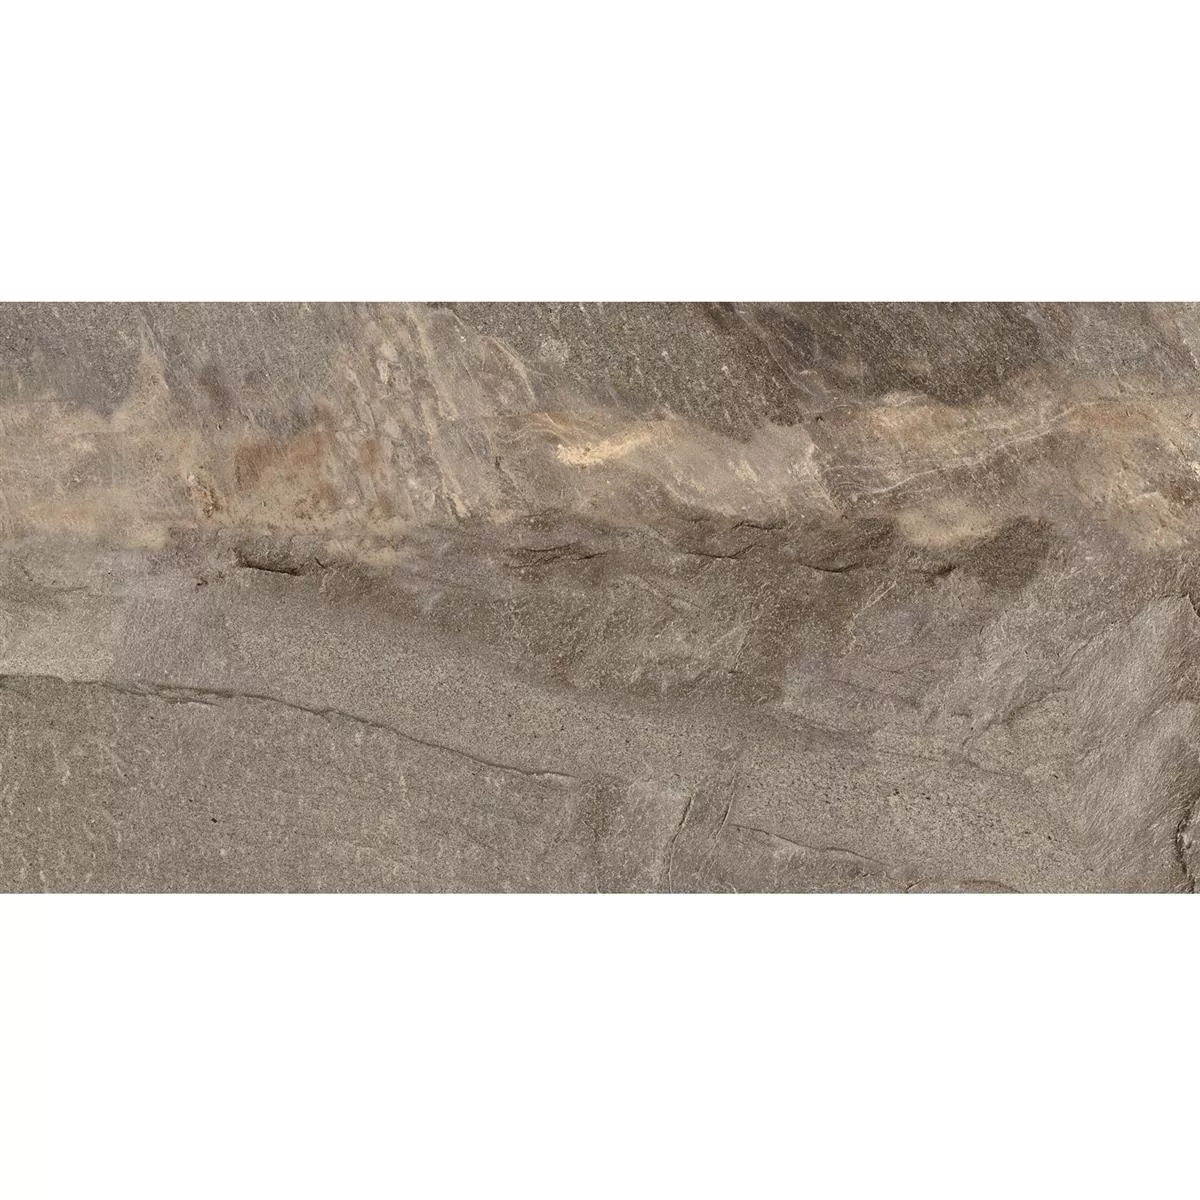 Gresie Homeland Aspect De Piatră Naturală R10 Bronz 30x60cm